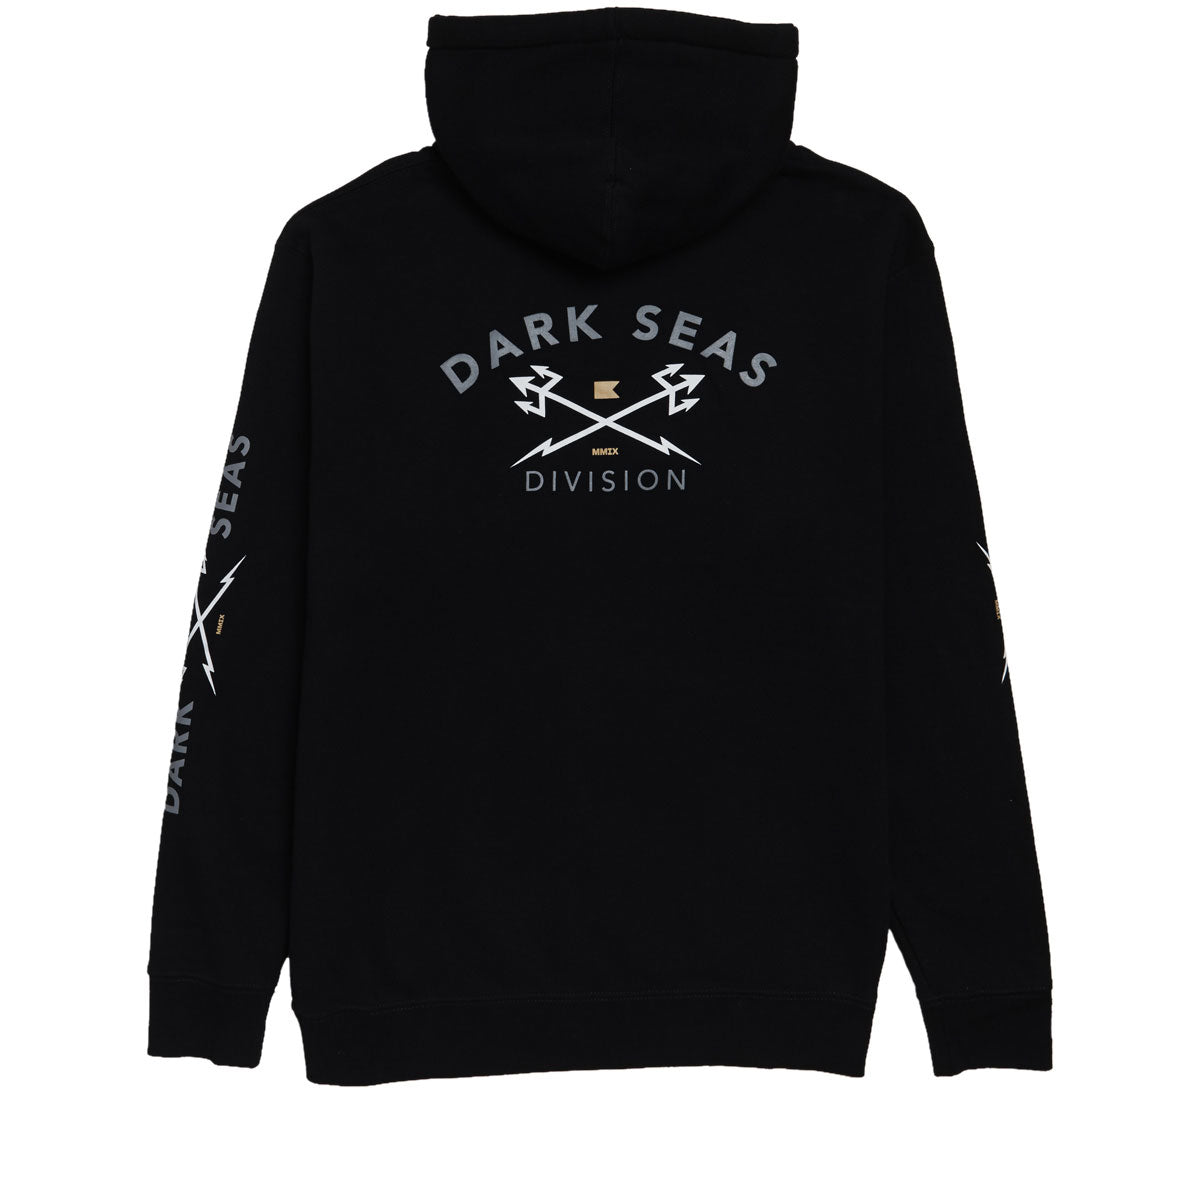 Dark Seas Headmaster Hoodie - Black/White image 2